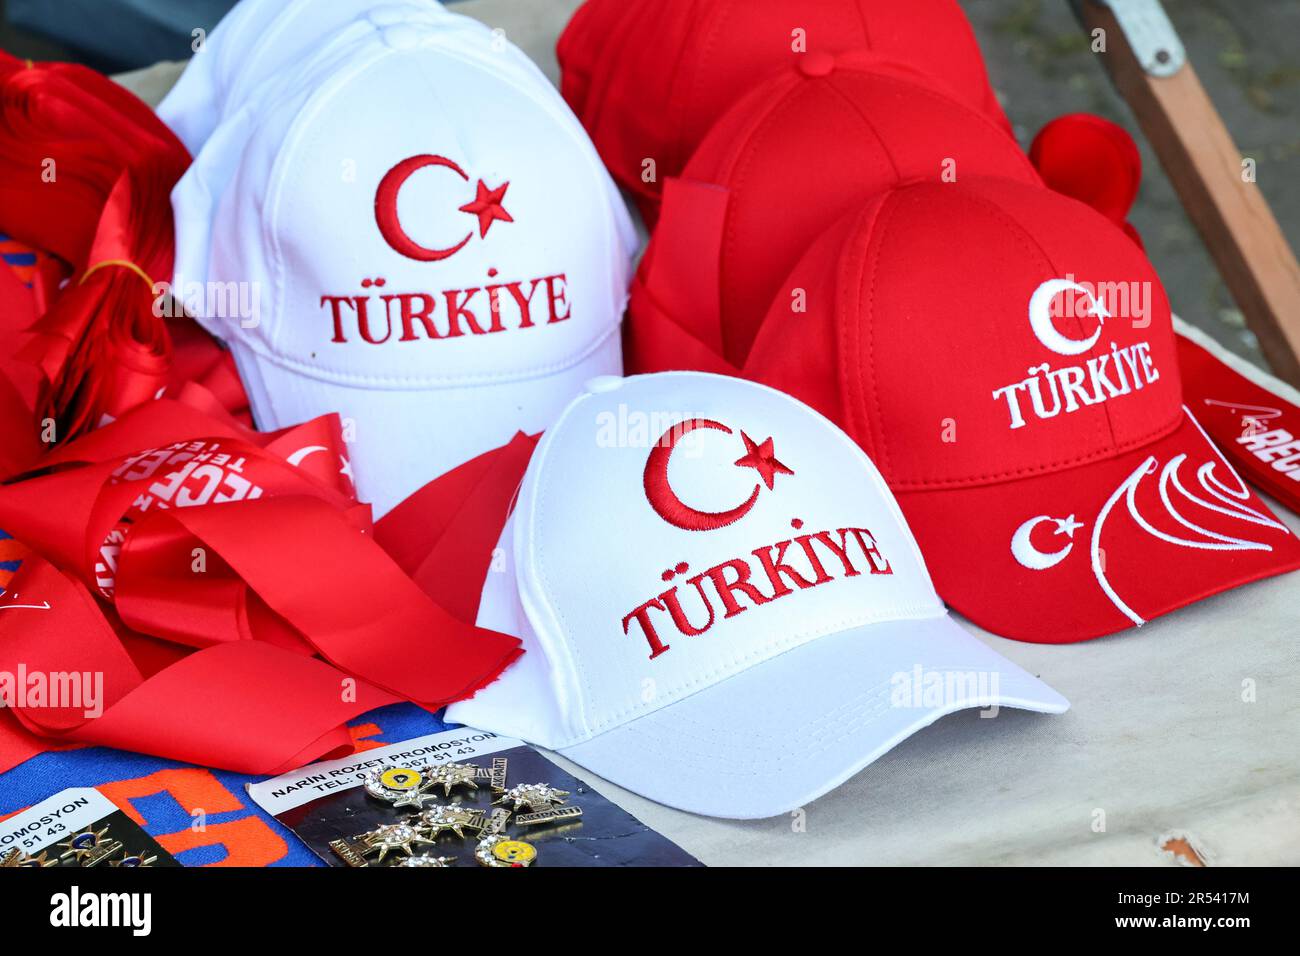 May 29.2023. Turkey. Istambul. Baseball Alamy caps Photo with Turkish Stock symbols 